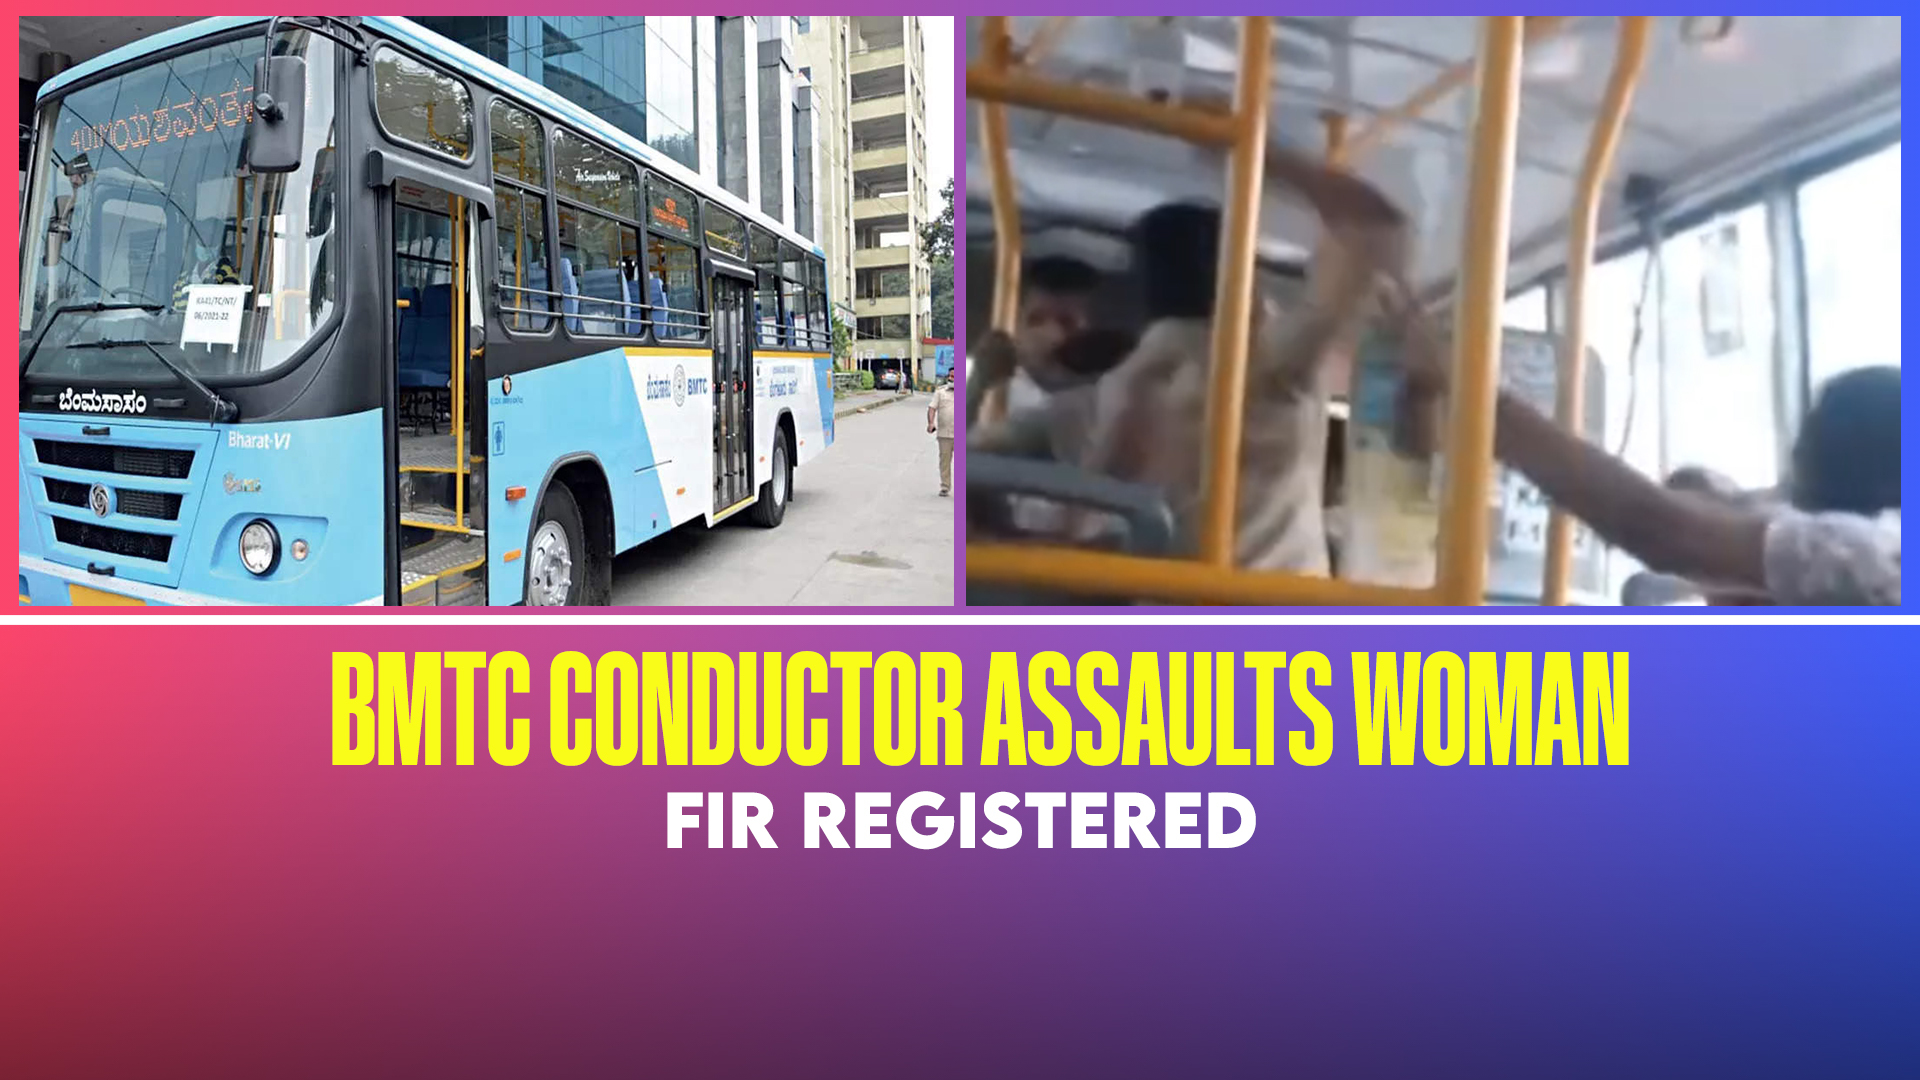 BMTC conductor assaults woman